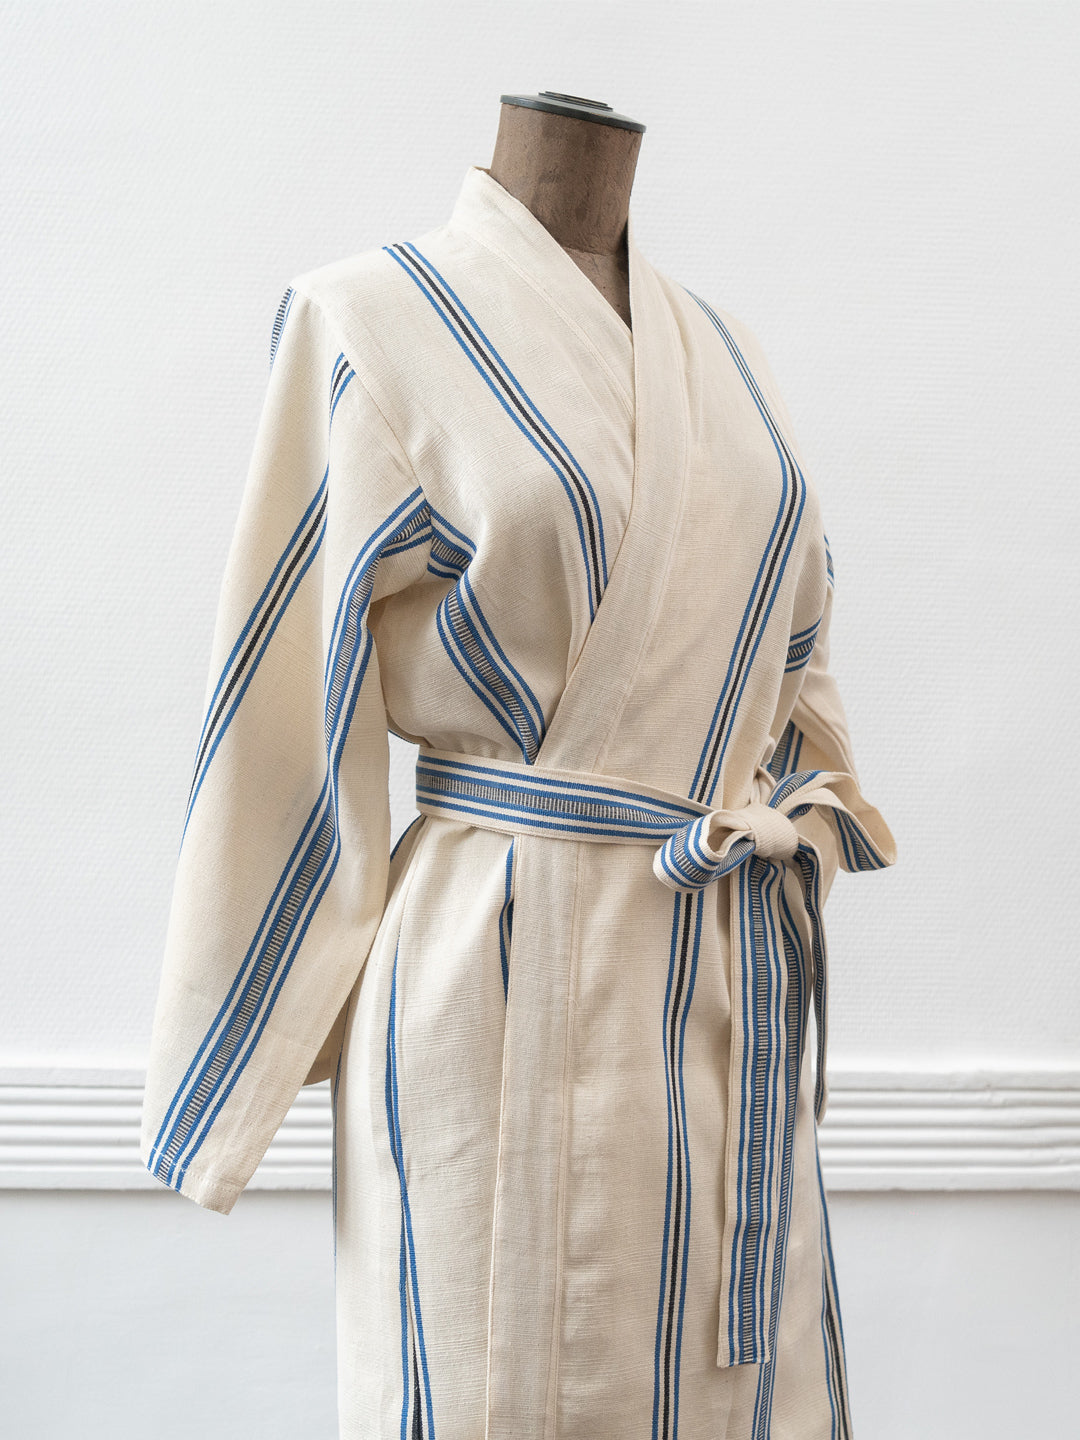 Kimono Tensira 100% coton, teint à la main